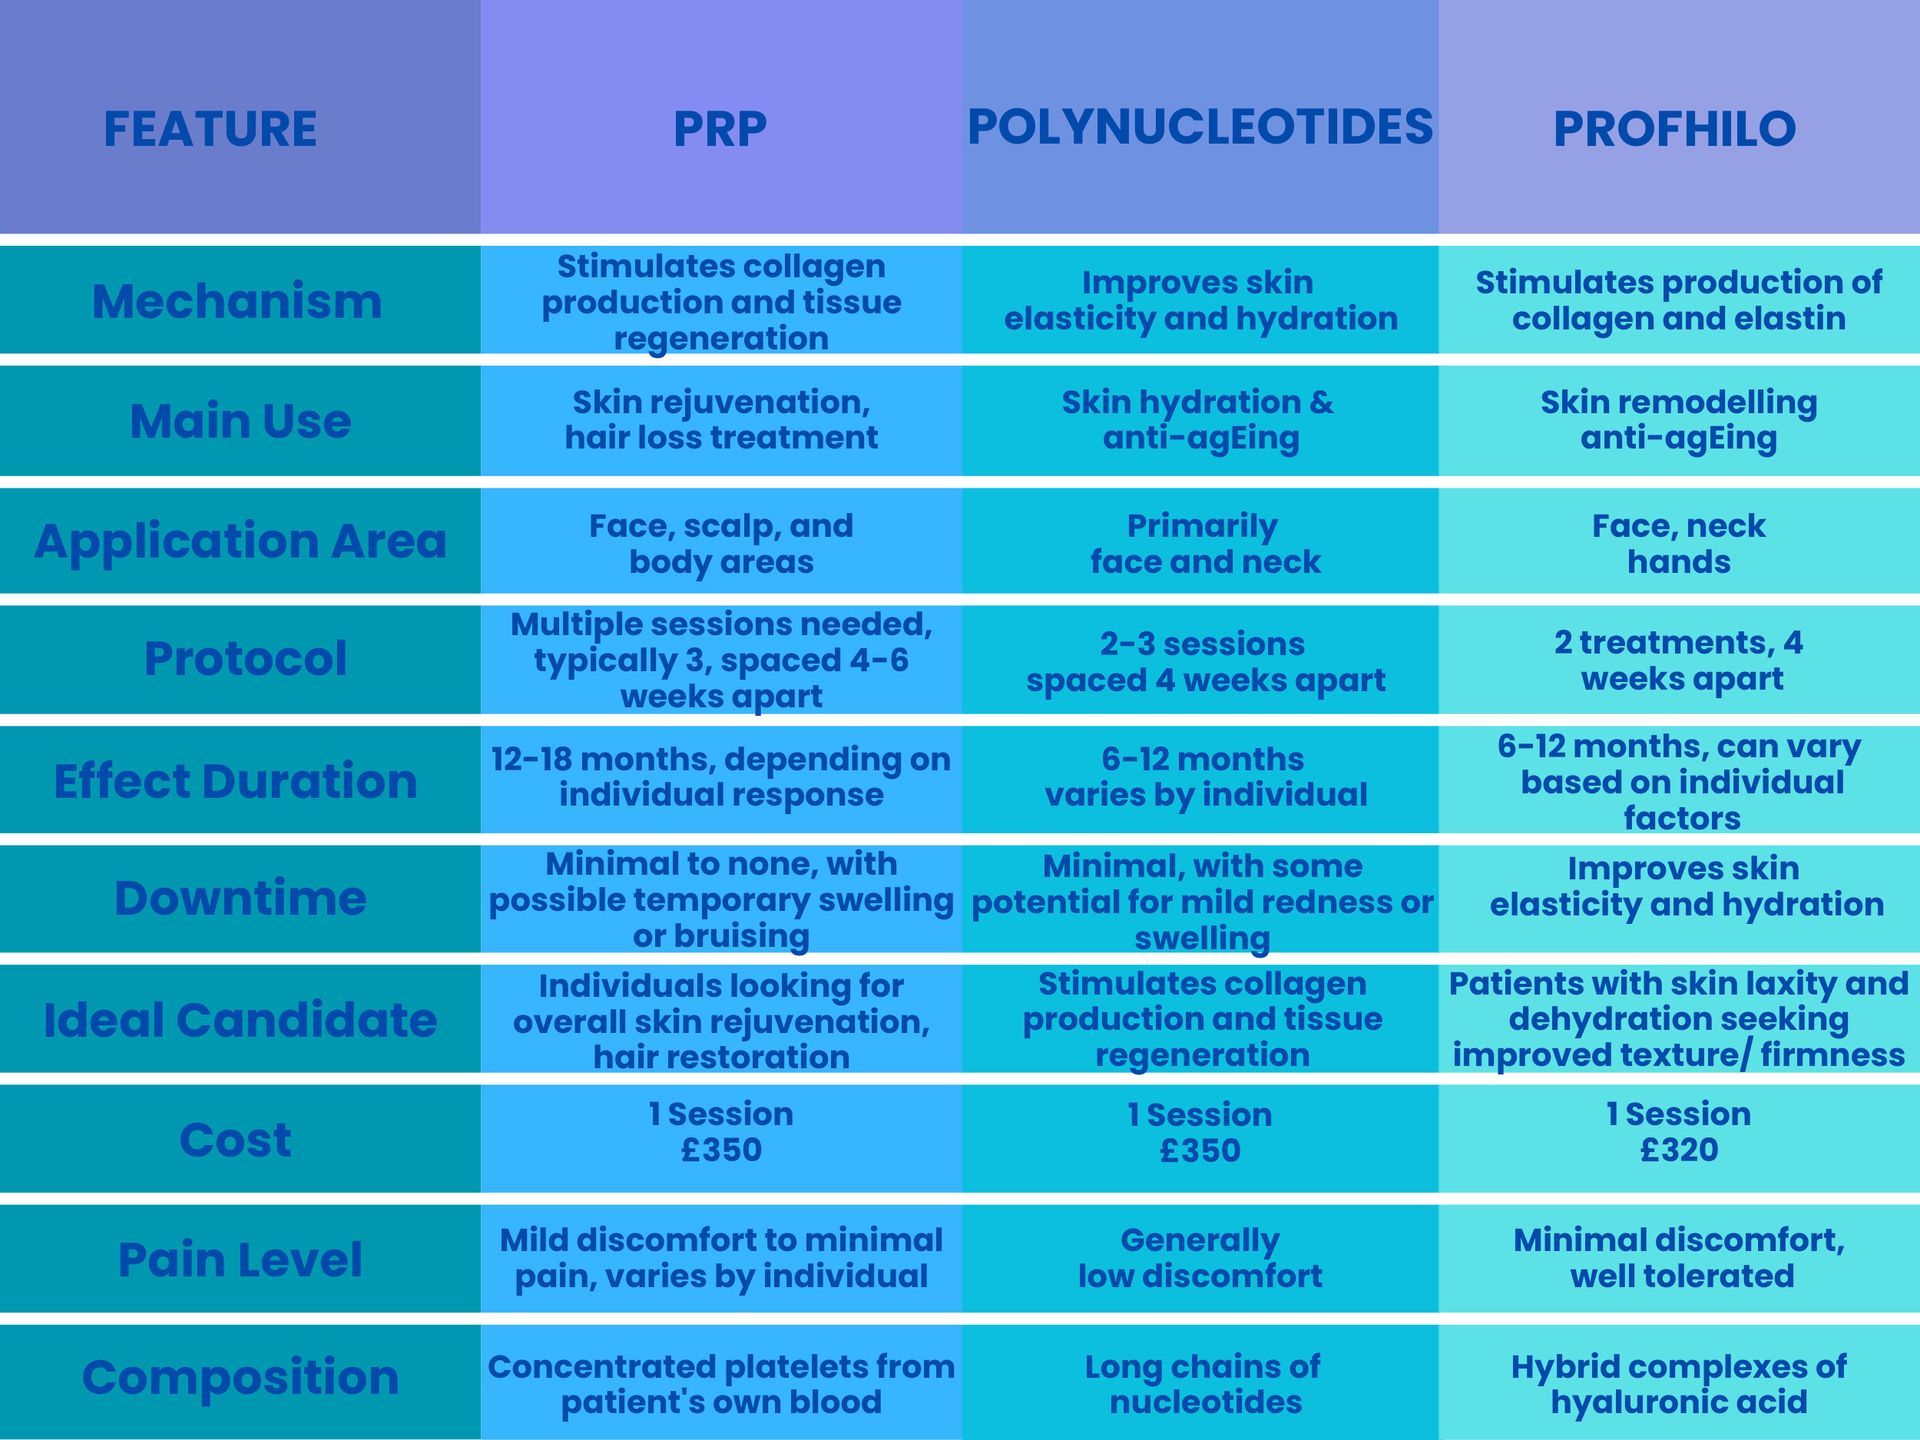 Prp vs profhilo vs polynucleotides